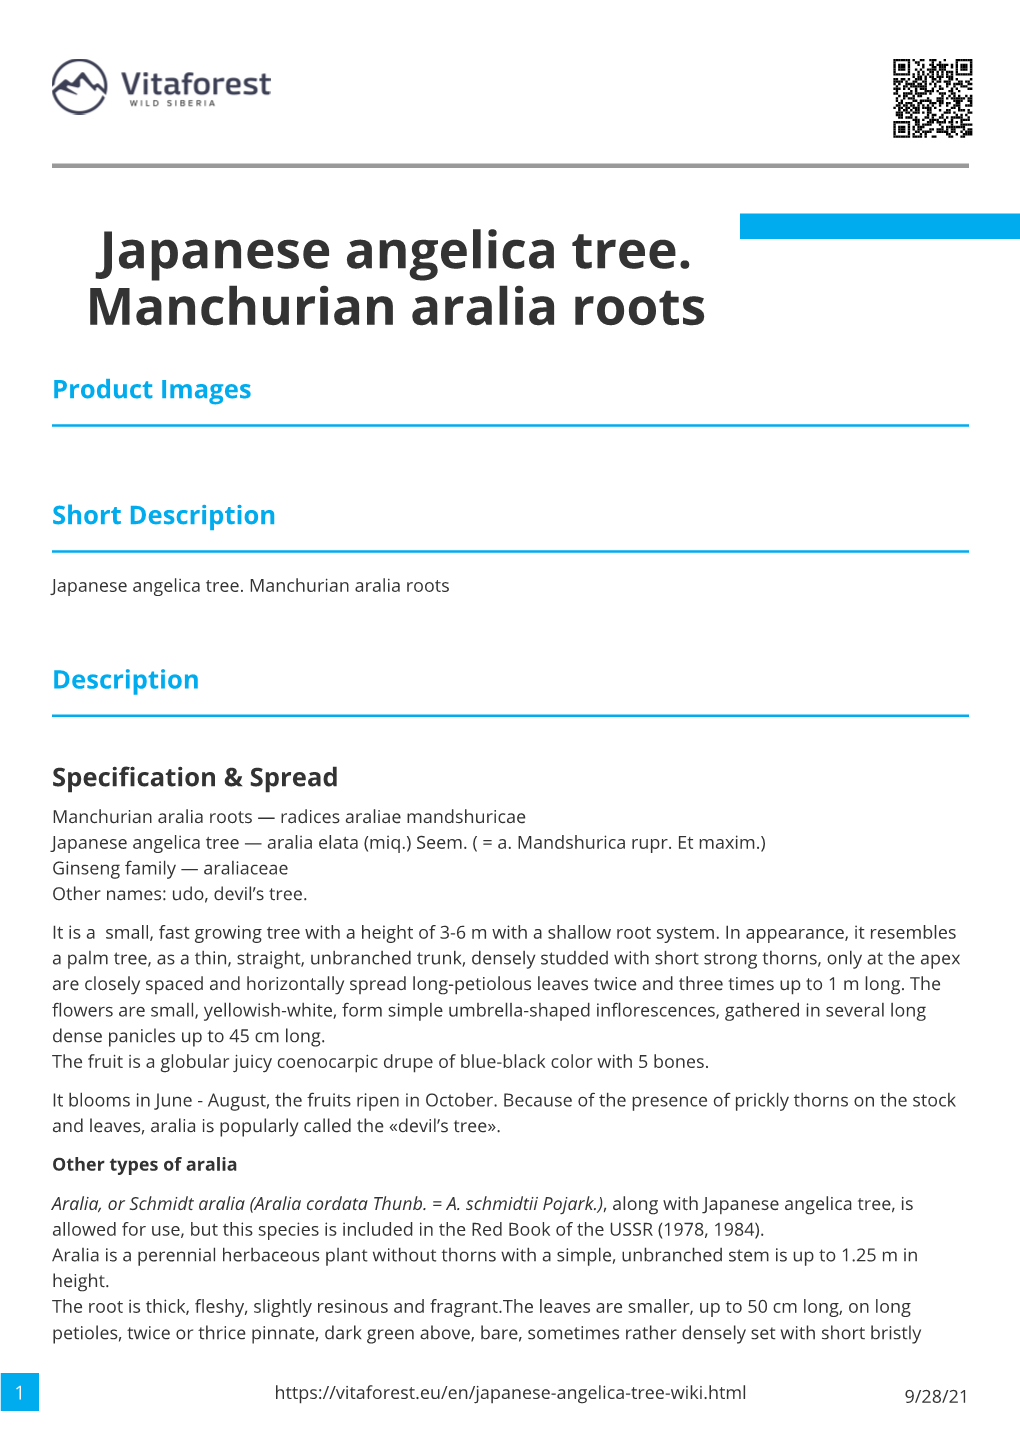 Japanese Angelica Tree. Manchurian Aralia Roots